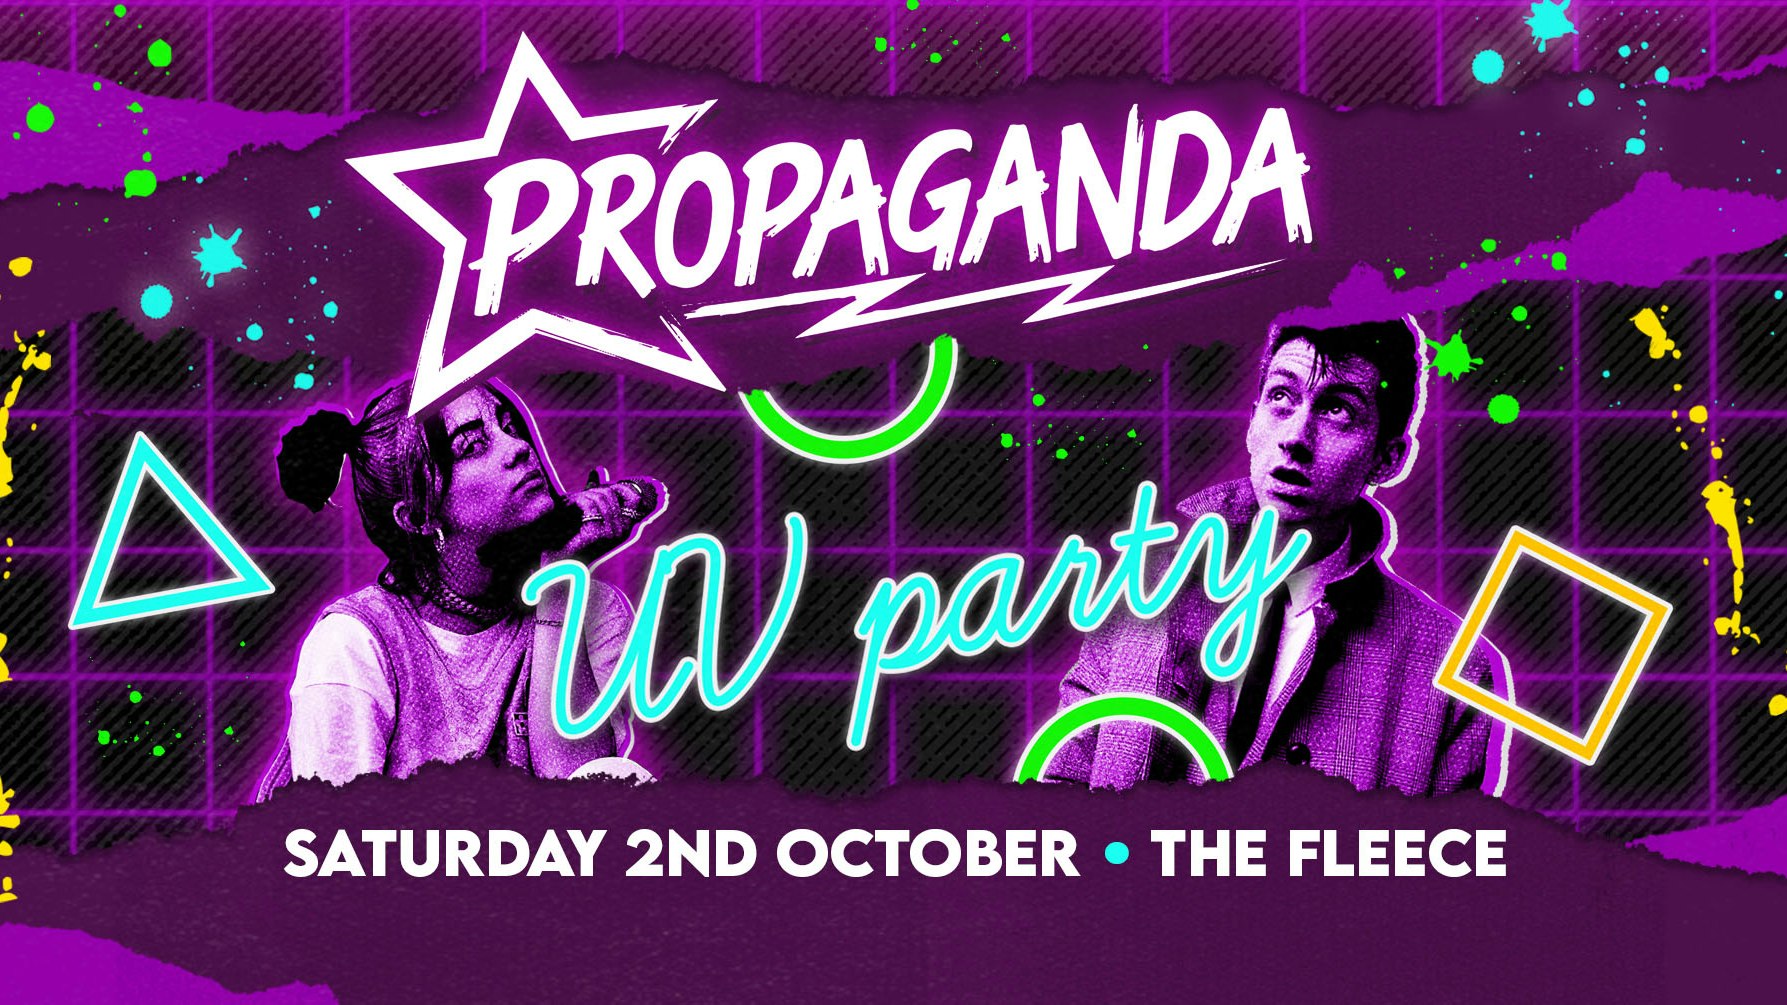 Propaganda Bristol – UV Party!